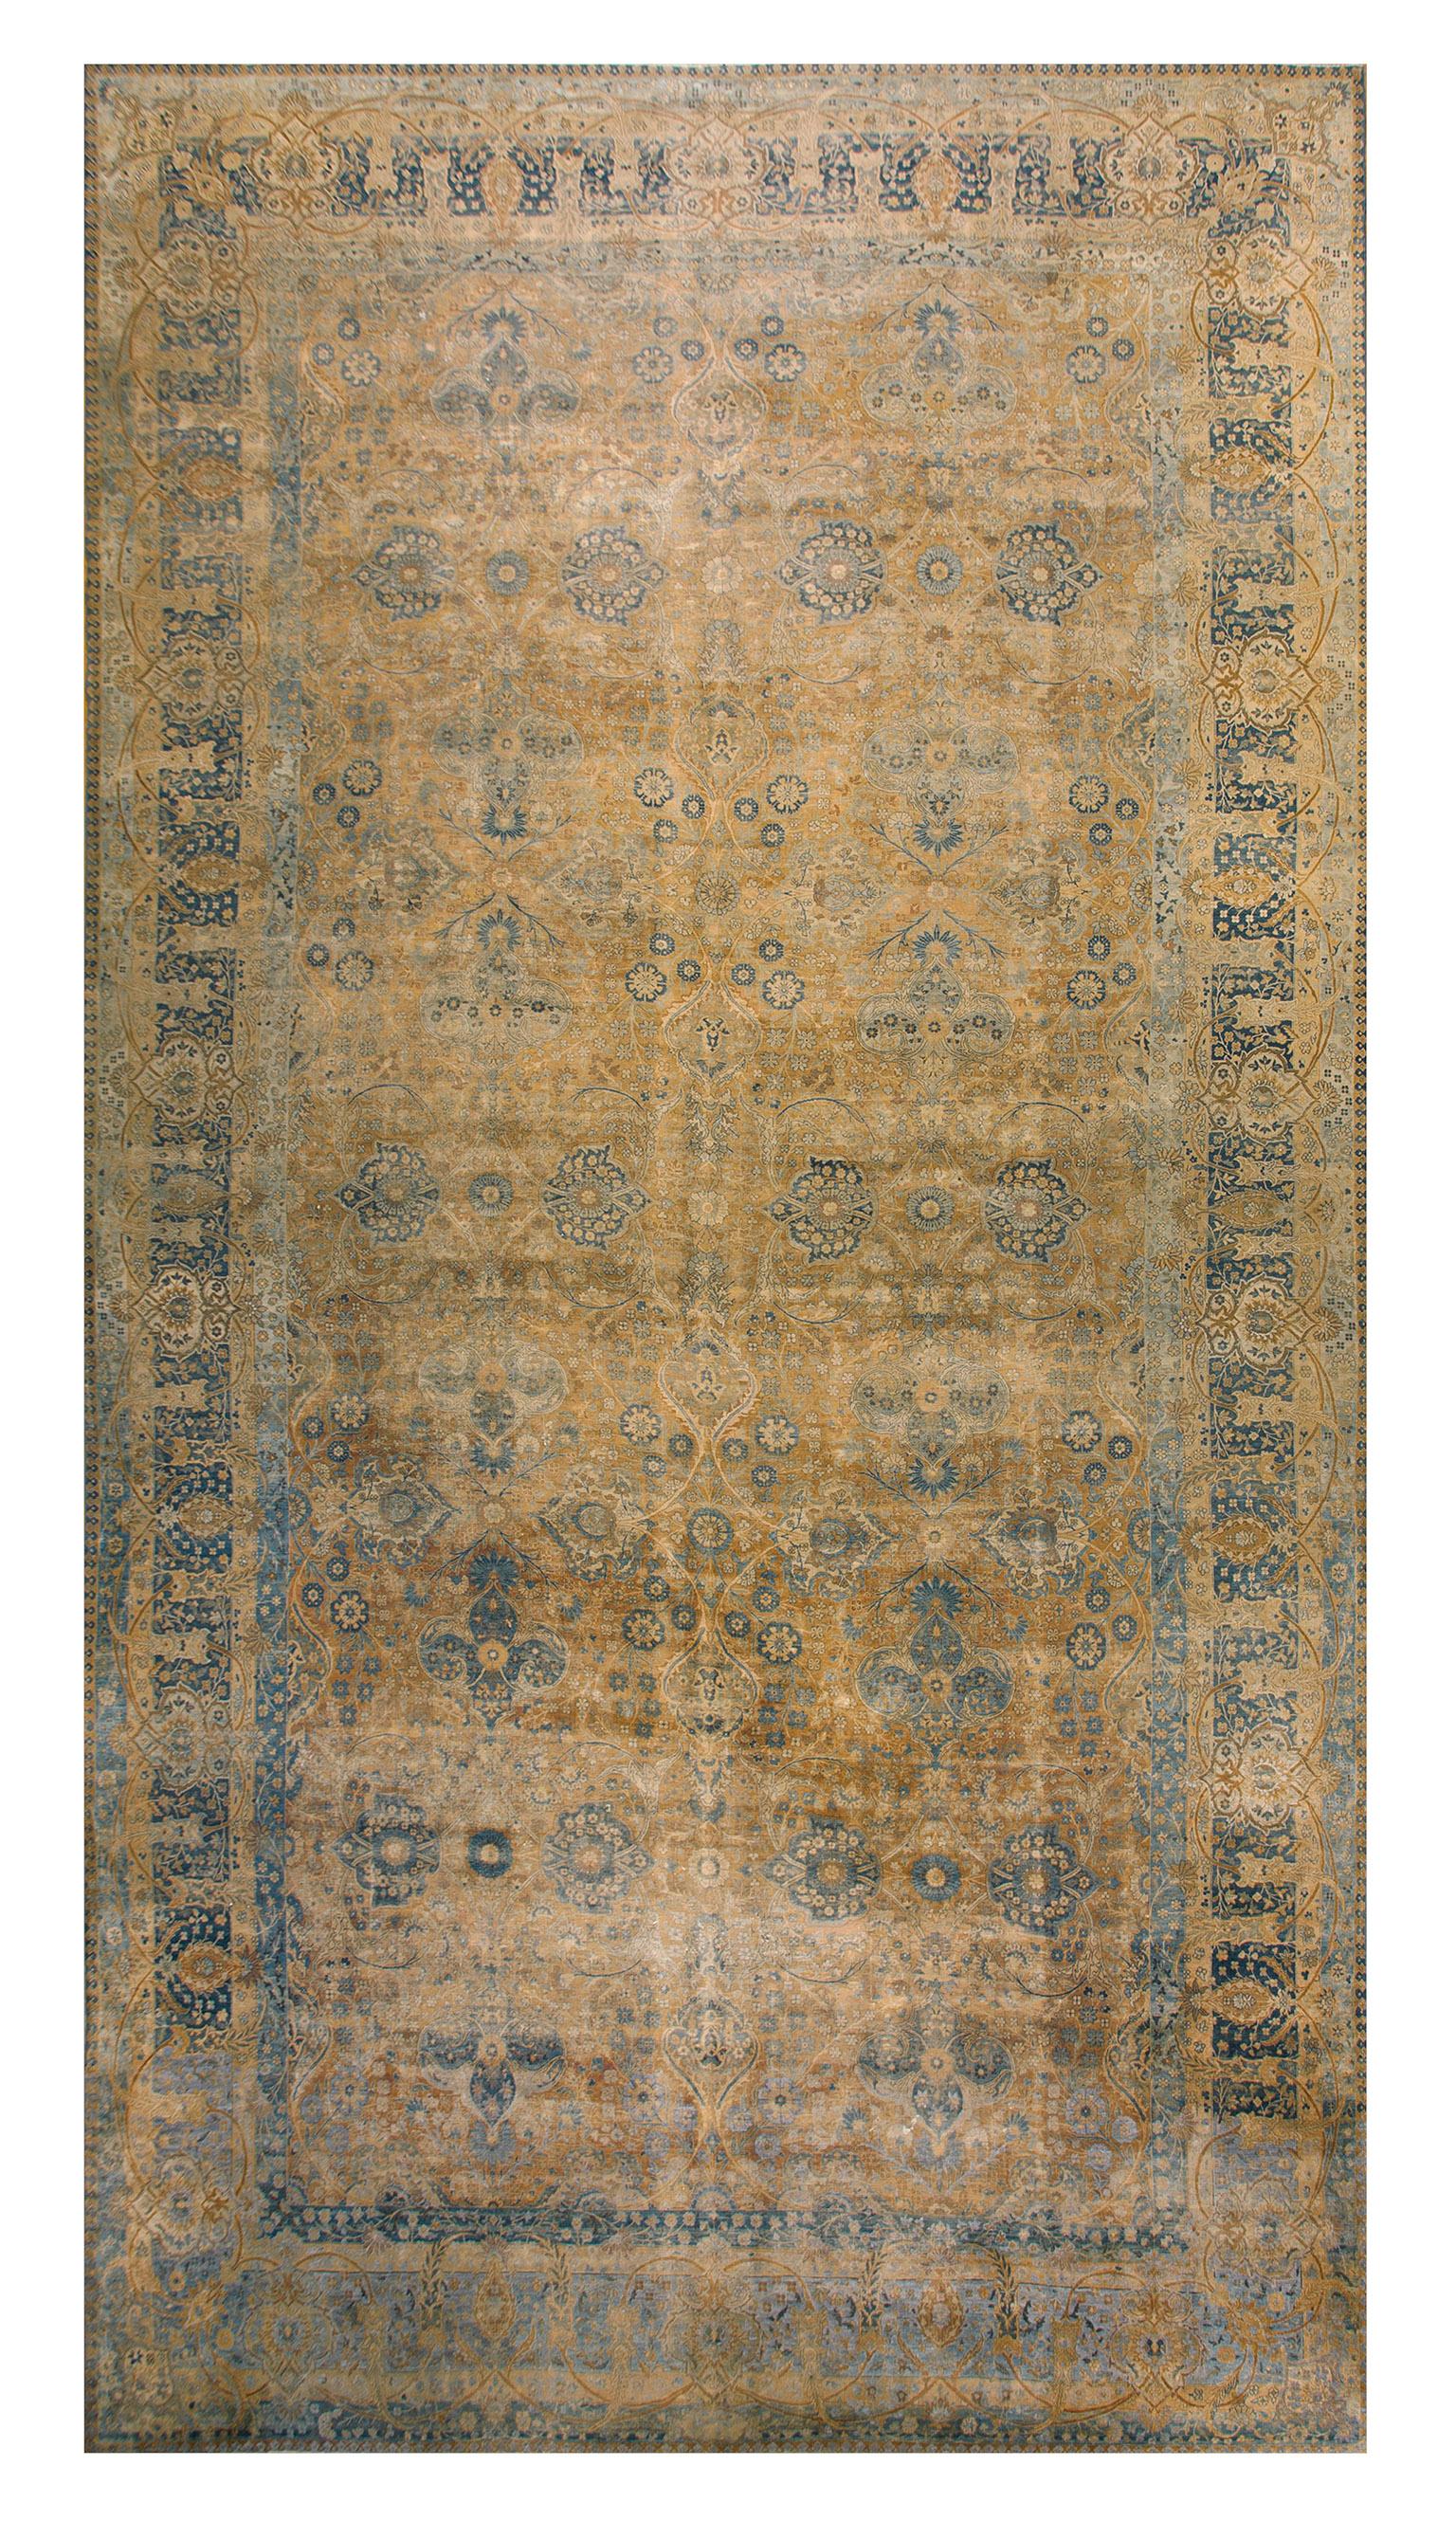 Early 20th Century Persian Kerman Carpet For Sale 5